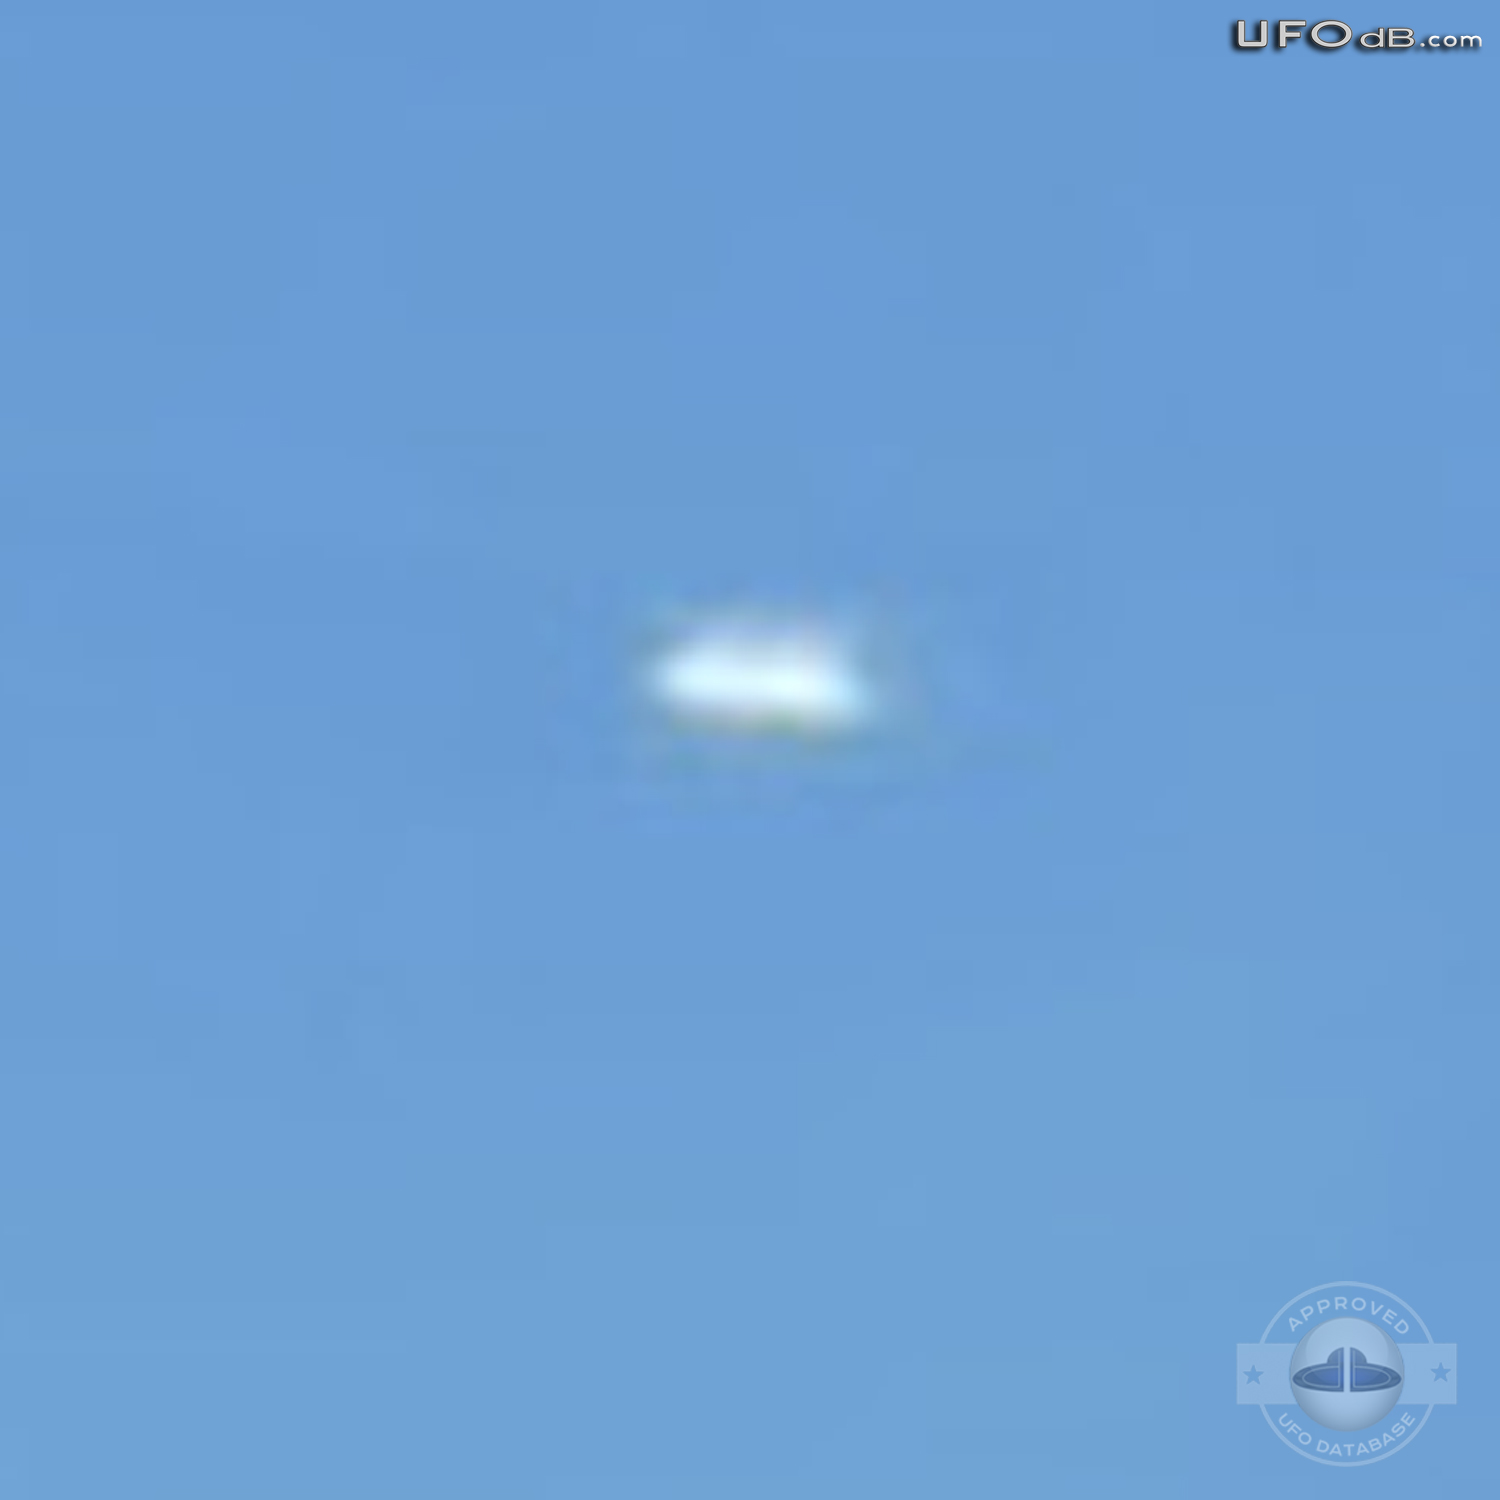 TACA passenger get UFO picture during flight over Peru | June 18 2010 UFO Picture #317-5